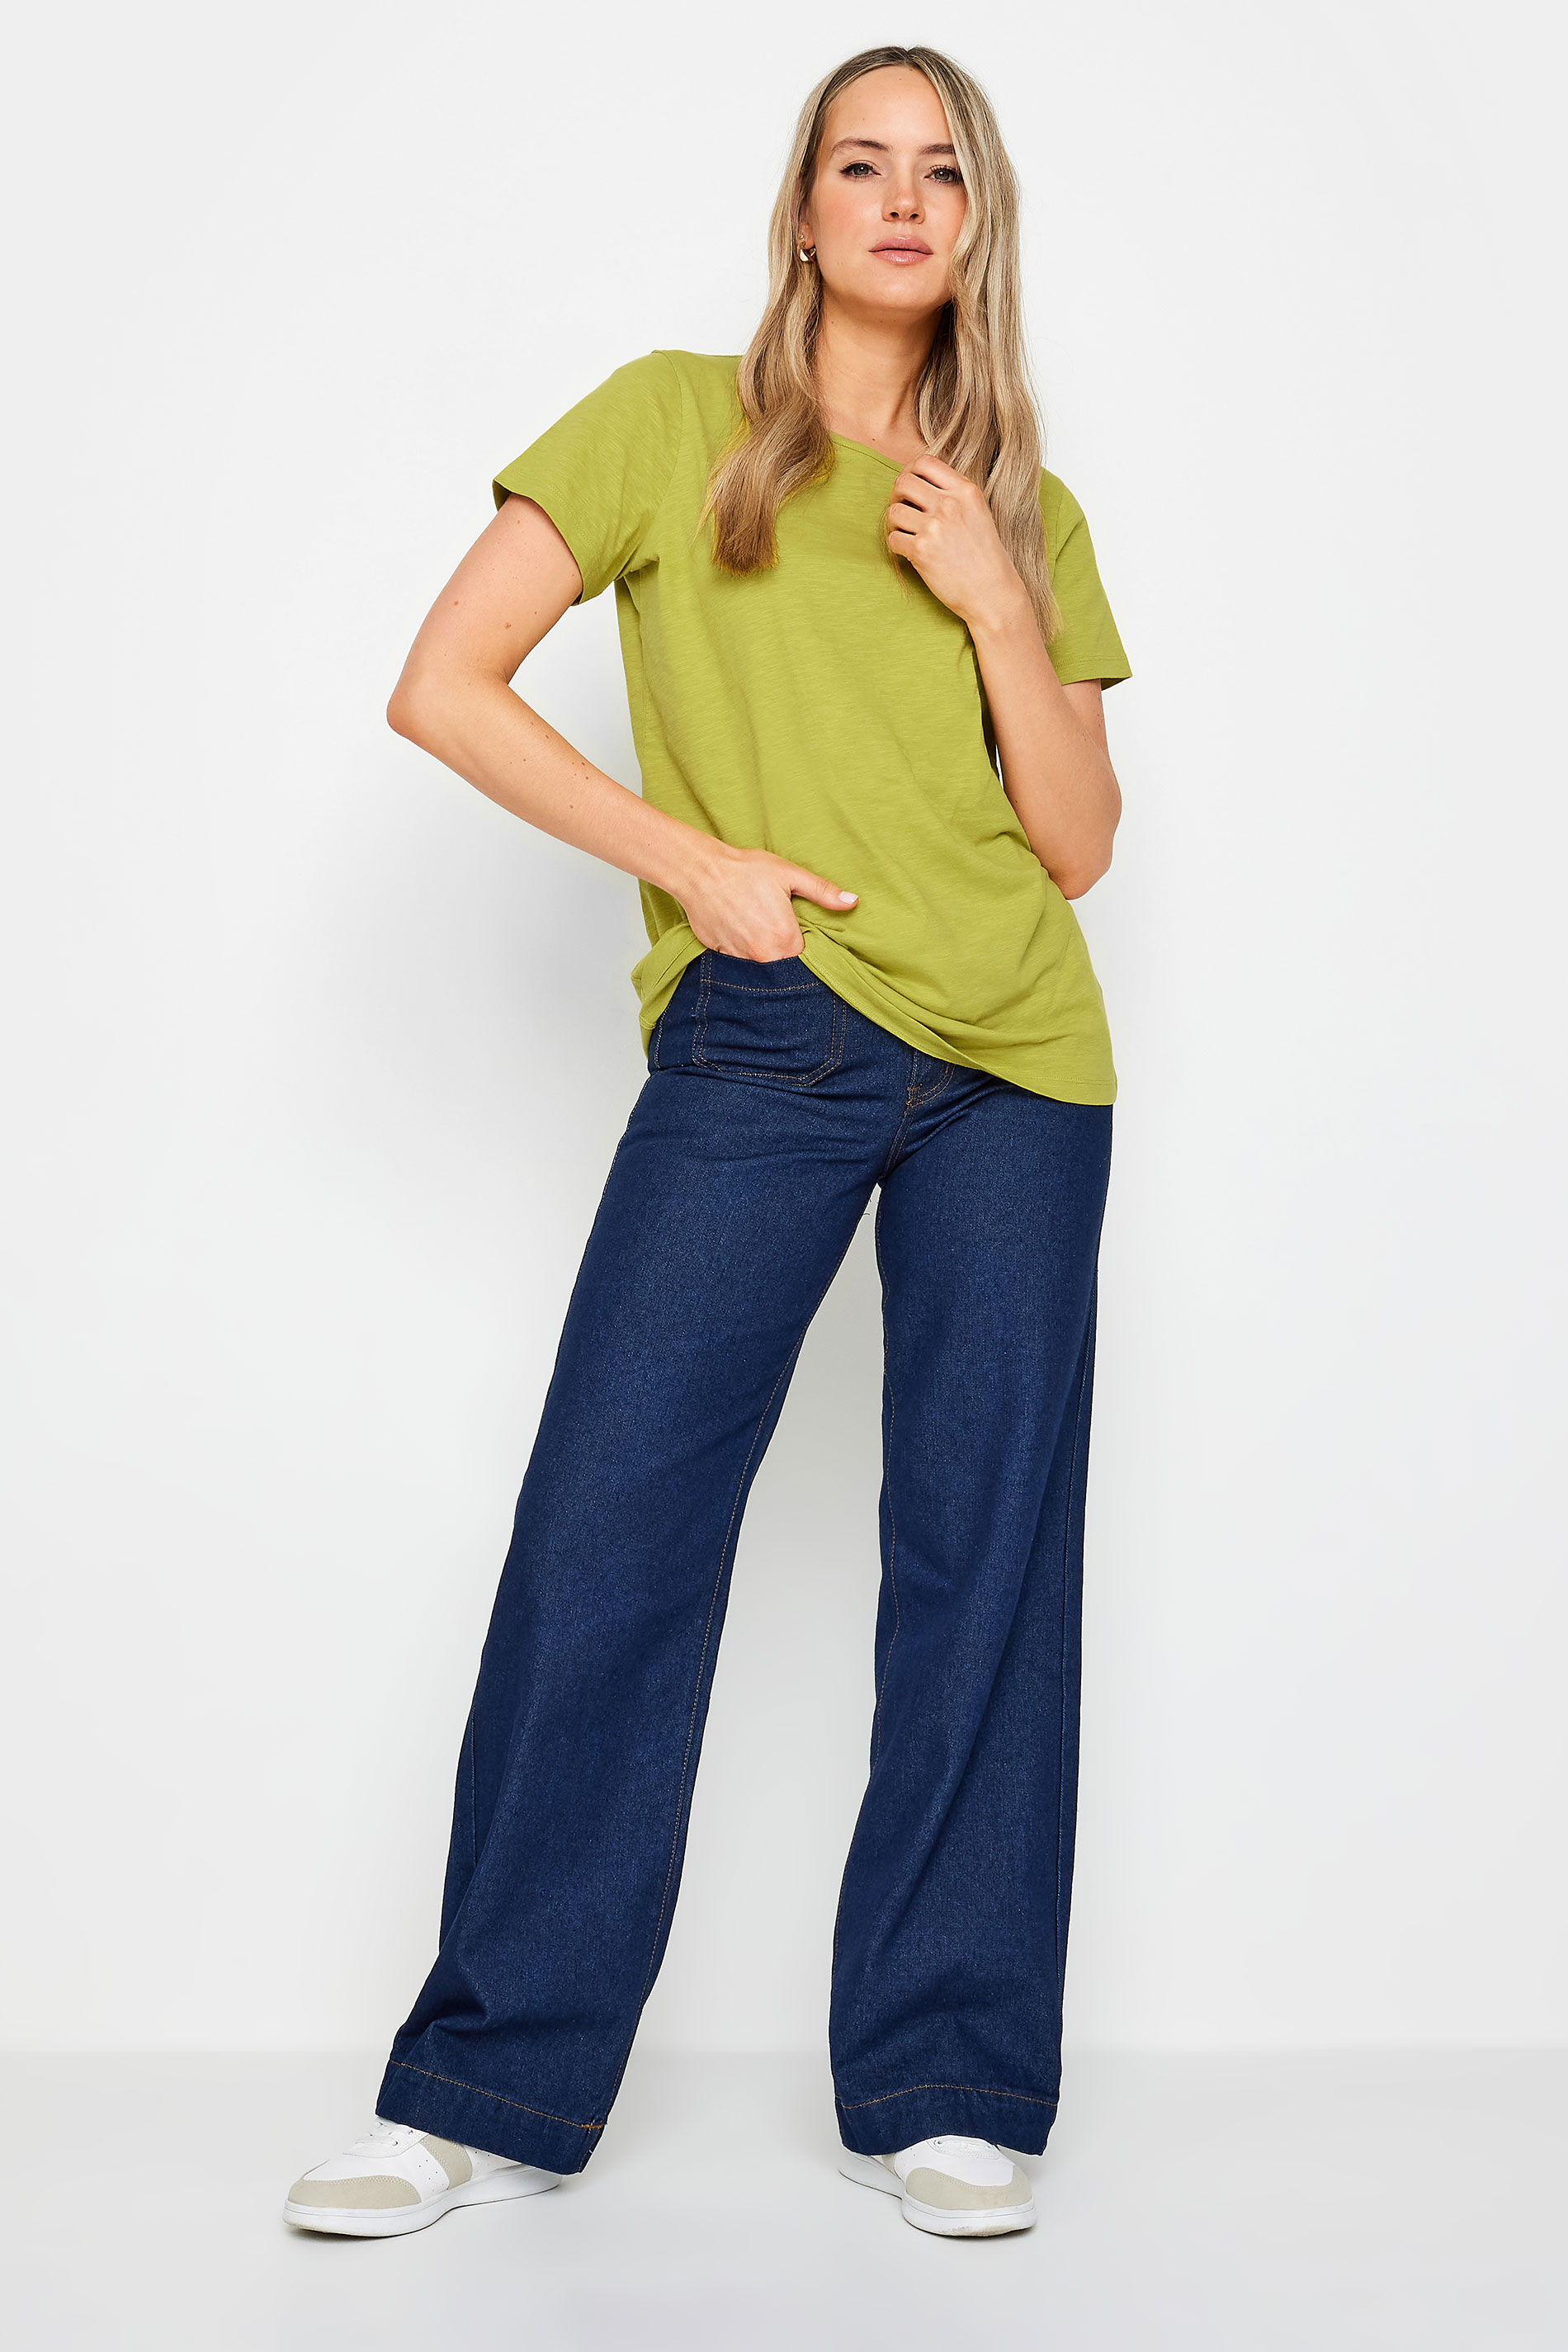 LTS Tall Womens Lime Green Cotton T-Shirt | Long Tall Sally 2